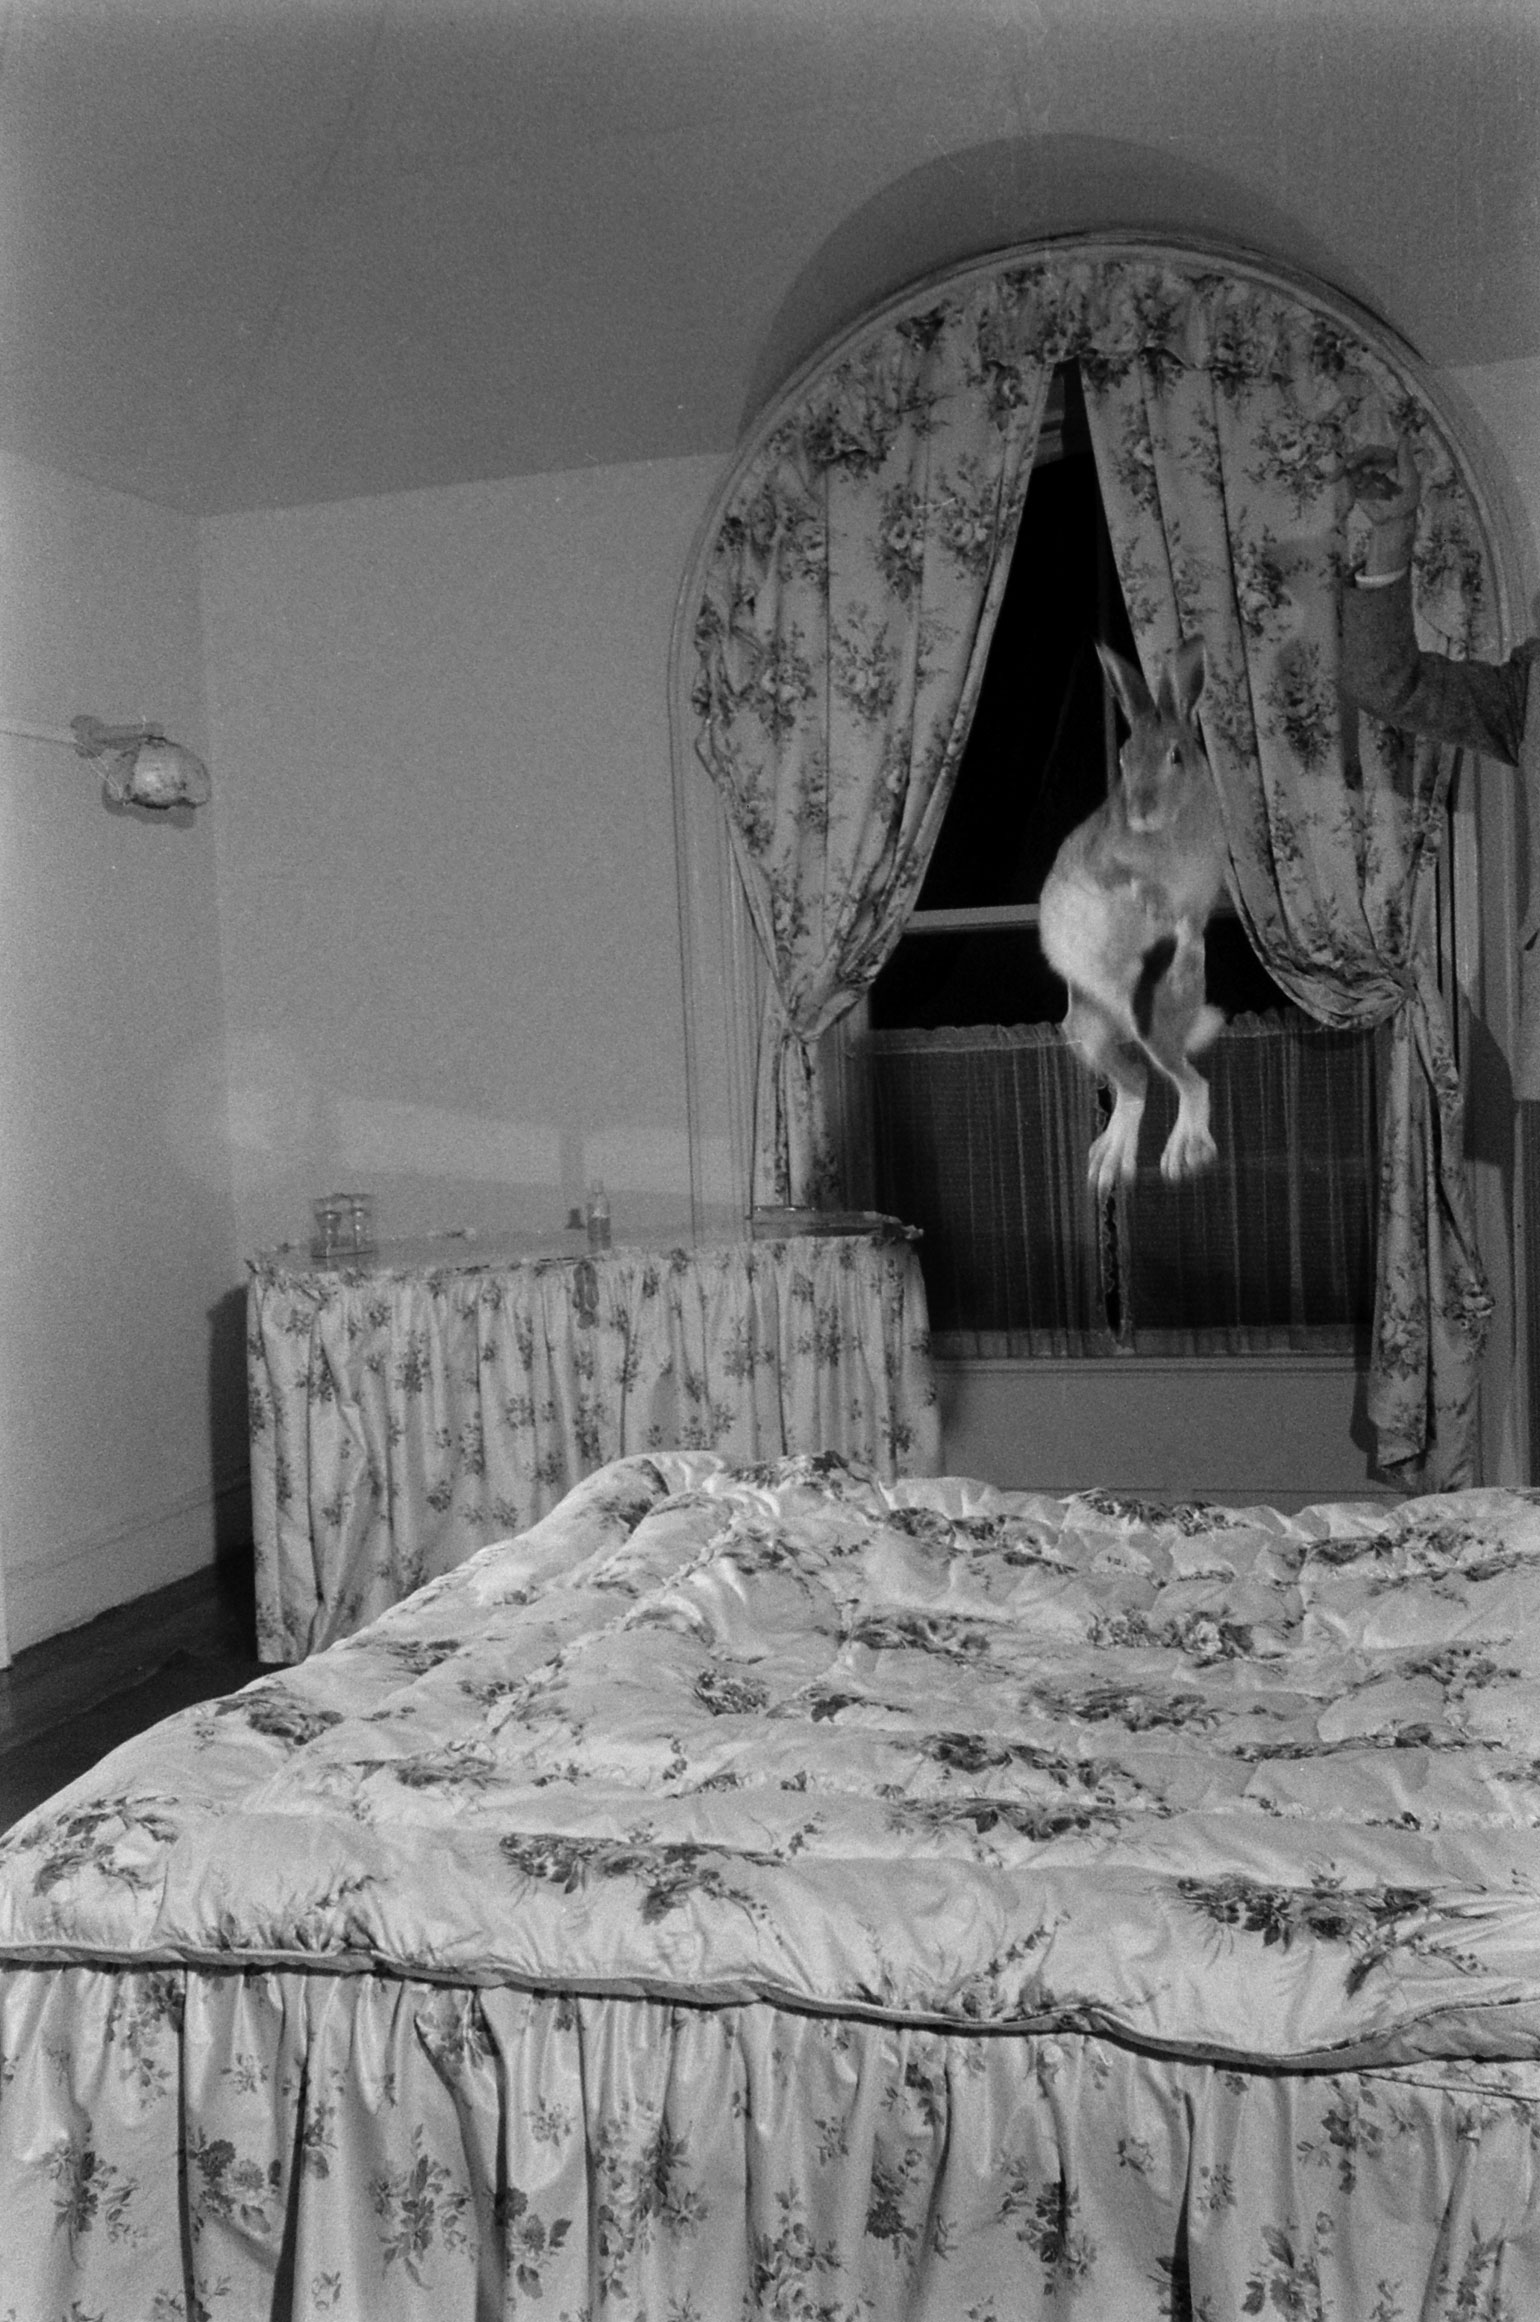 Horace the Irish hare in midair, 1956.